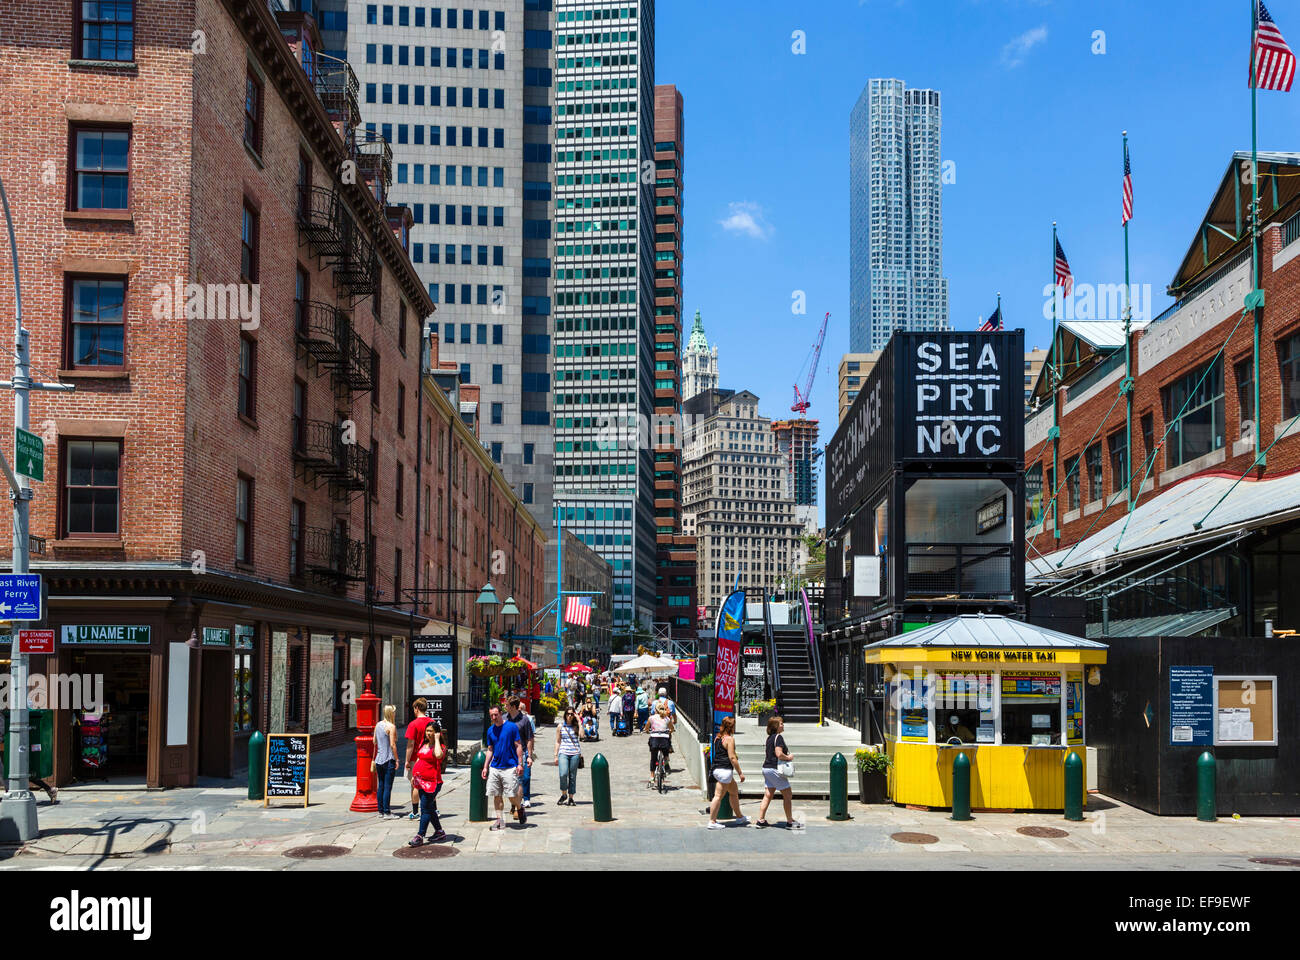 South Street Seaport district, Lower Manhattan, New York City, NY, USA Stock Photo